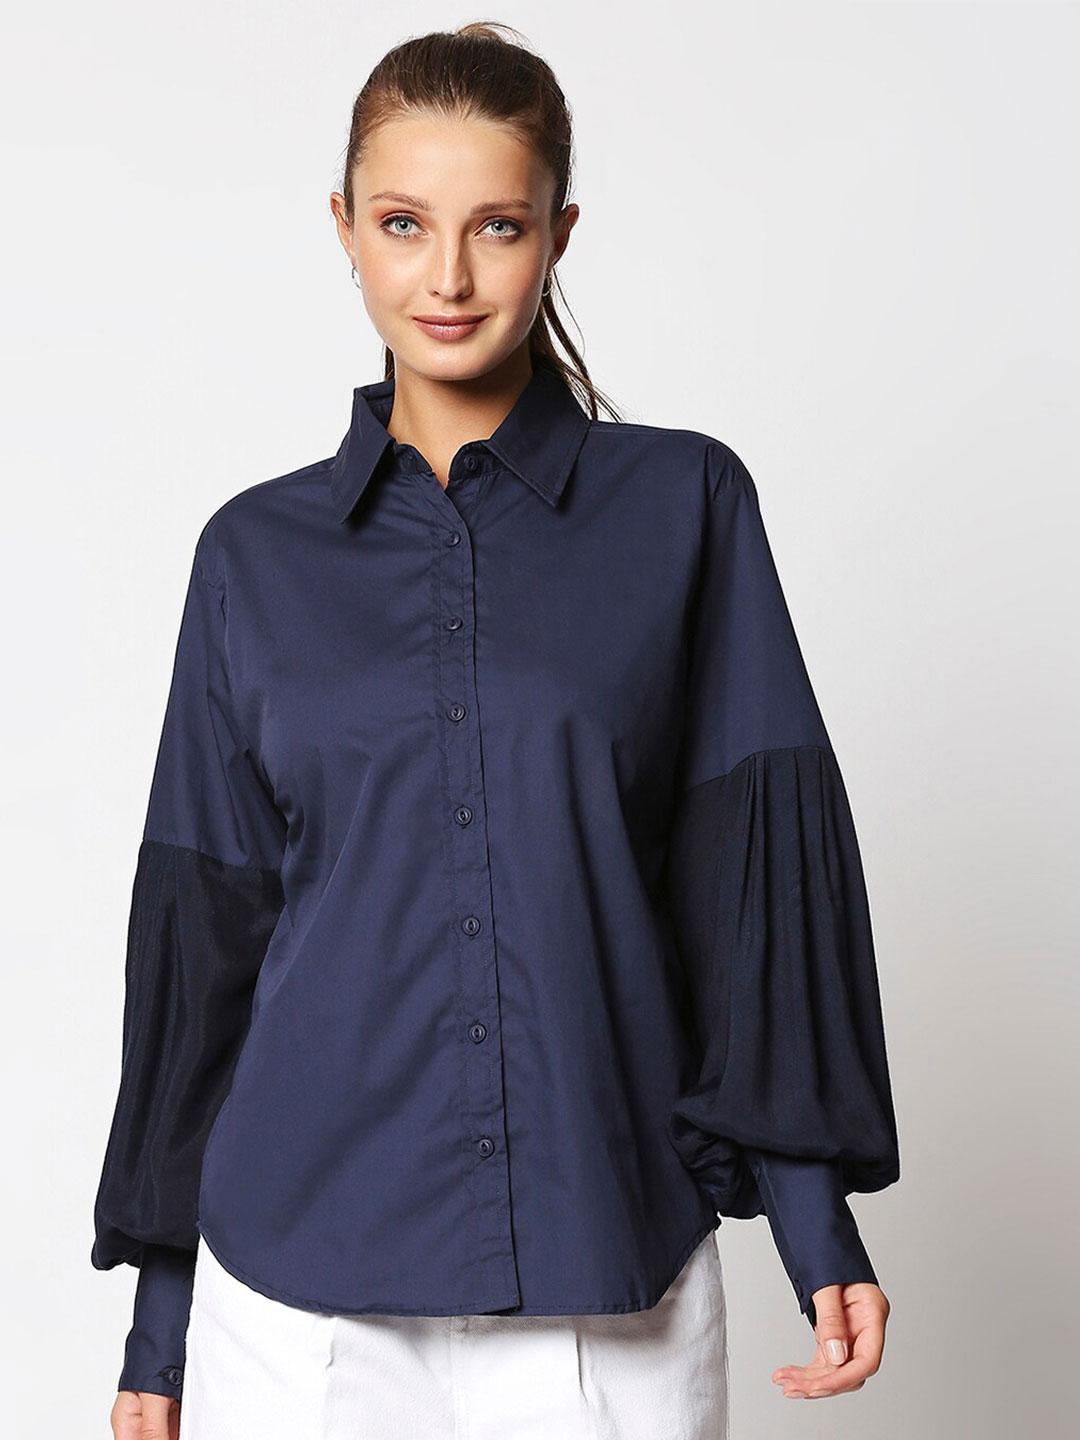 Remanika Spread Collar Comfort Fit Cotton Casual Shirt